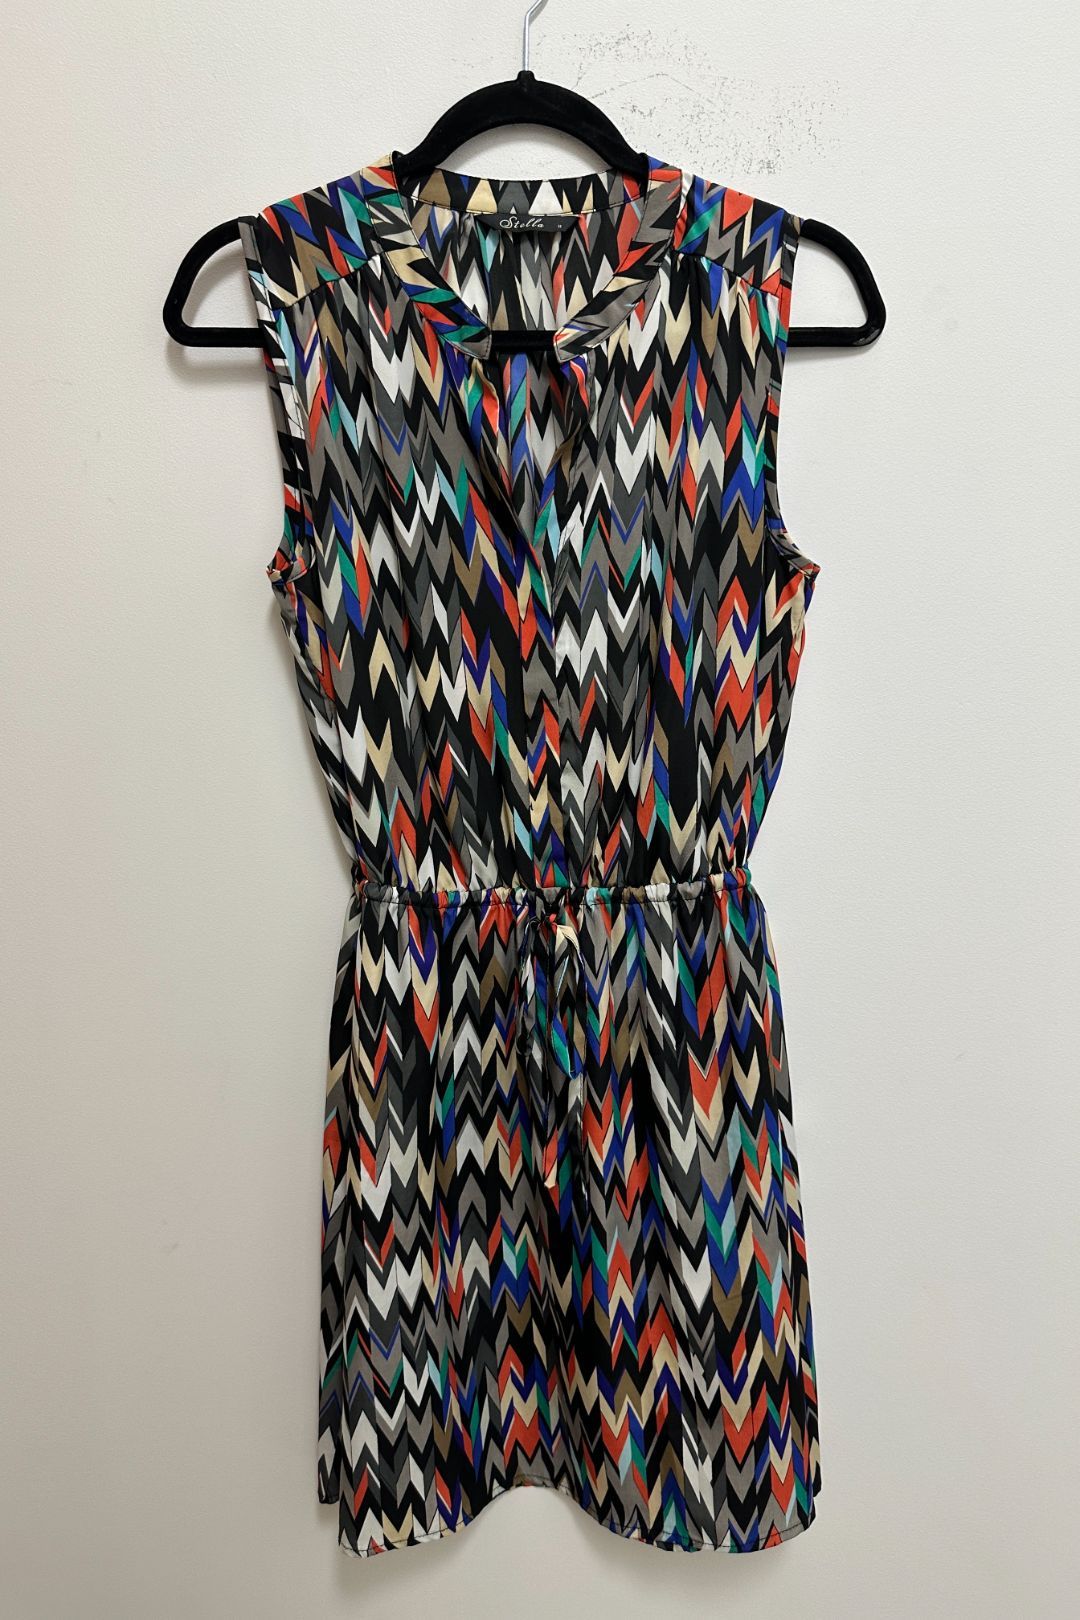 Stella McCartney Geometric Print Mini Dress in Multi